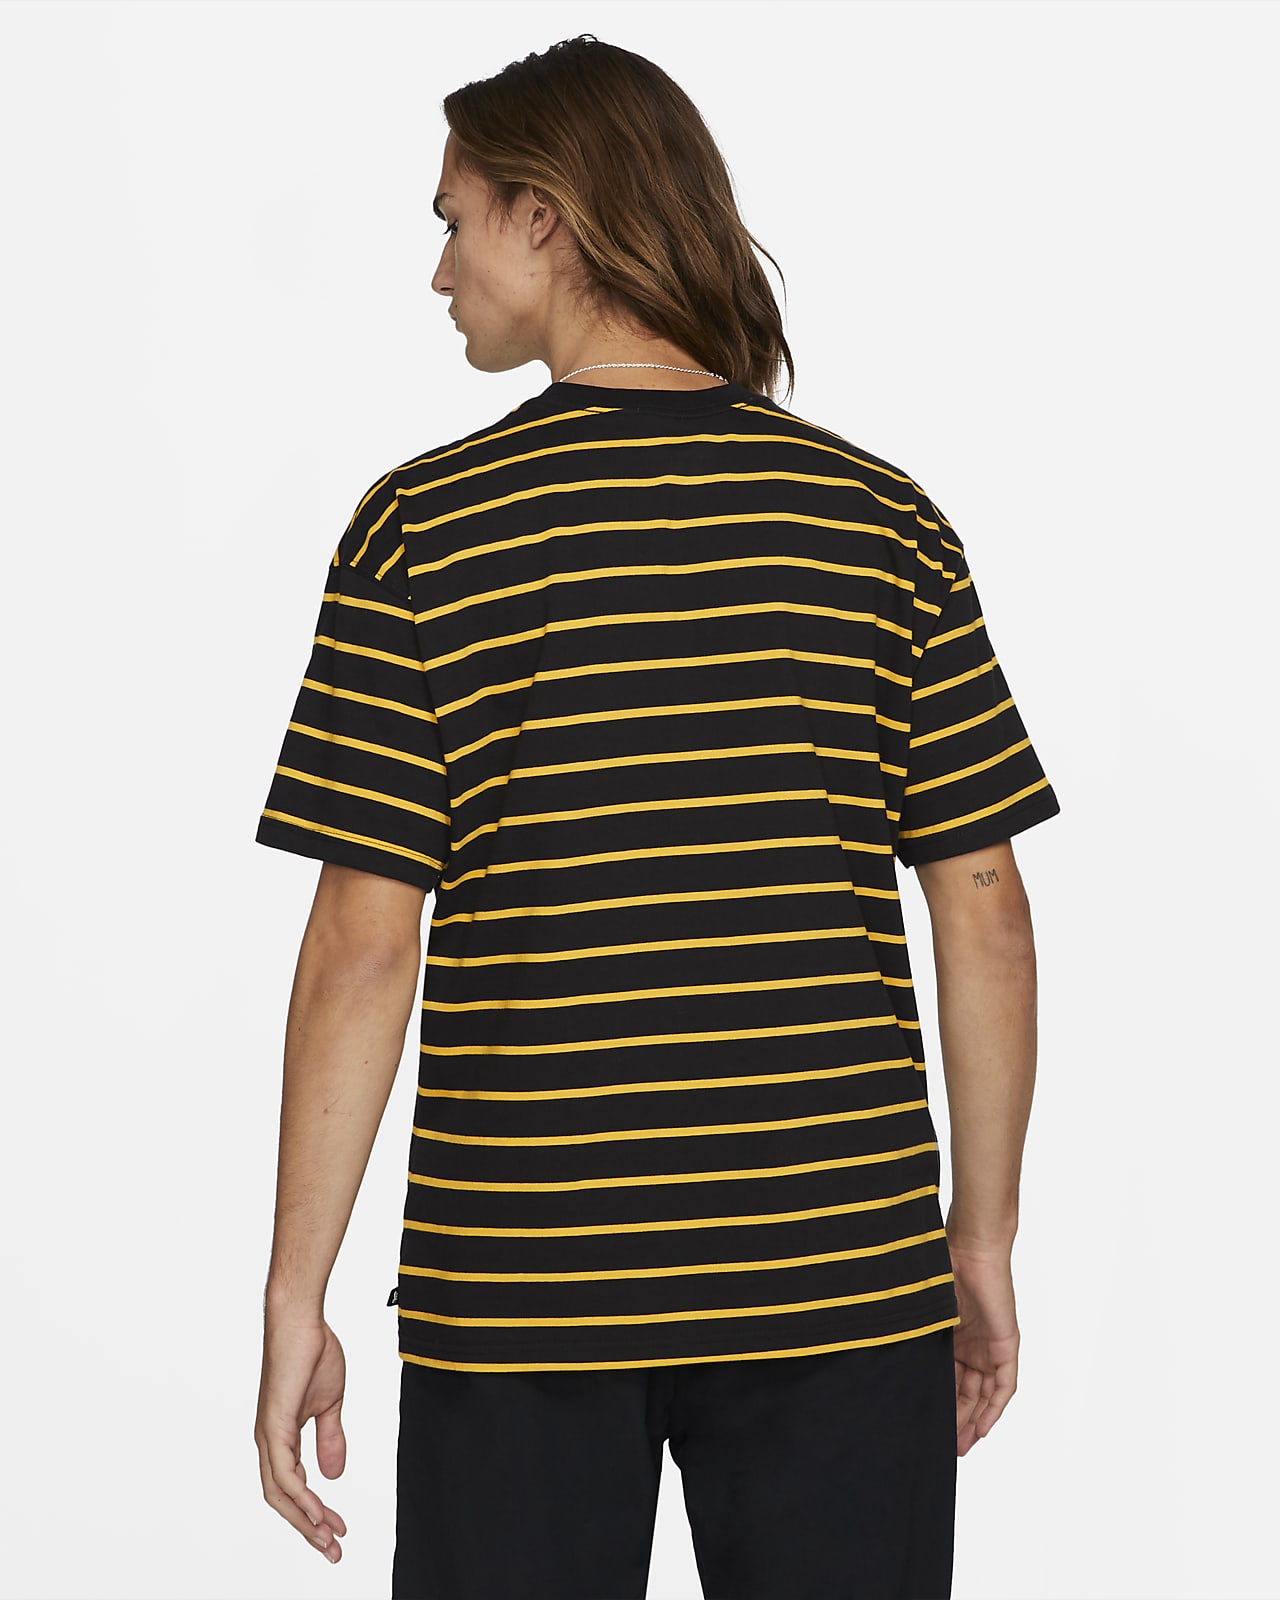 100% Stripes T-Shirt-2XL 